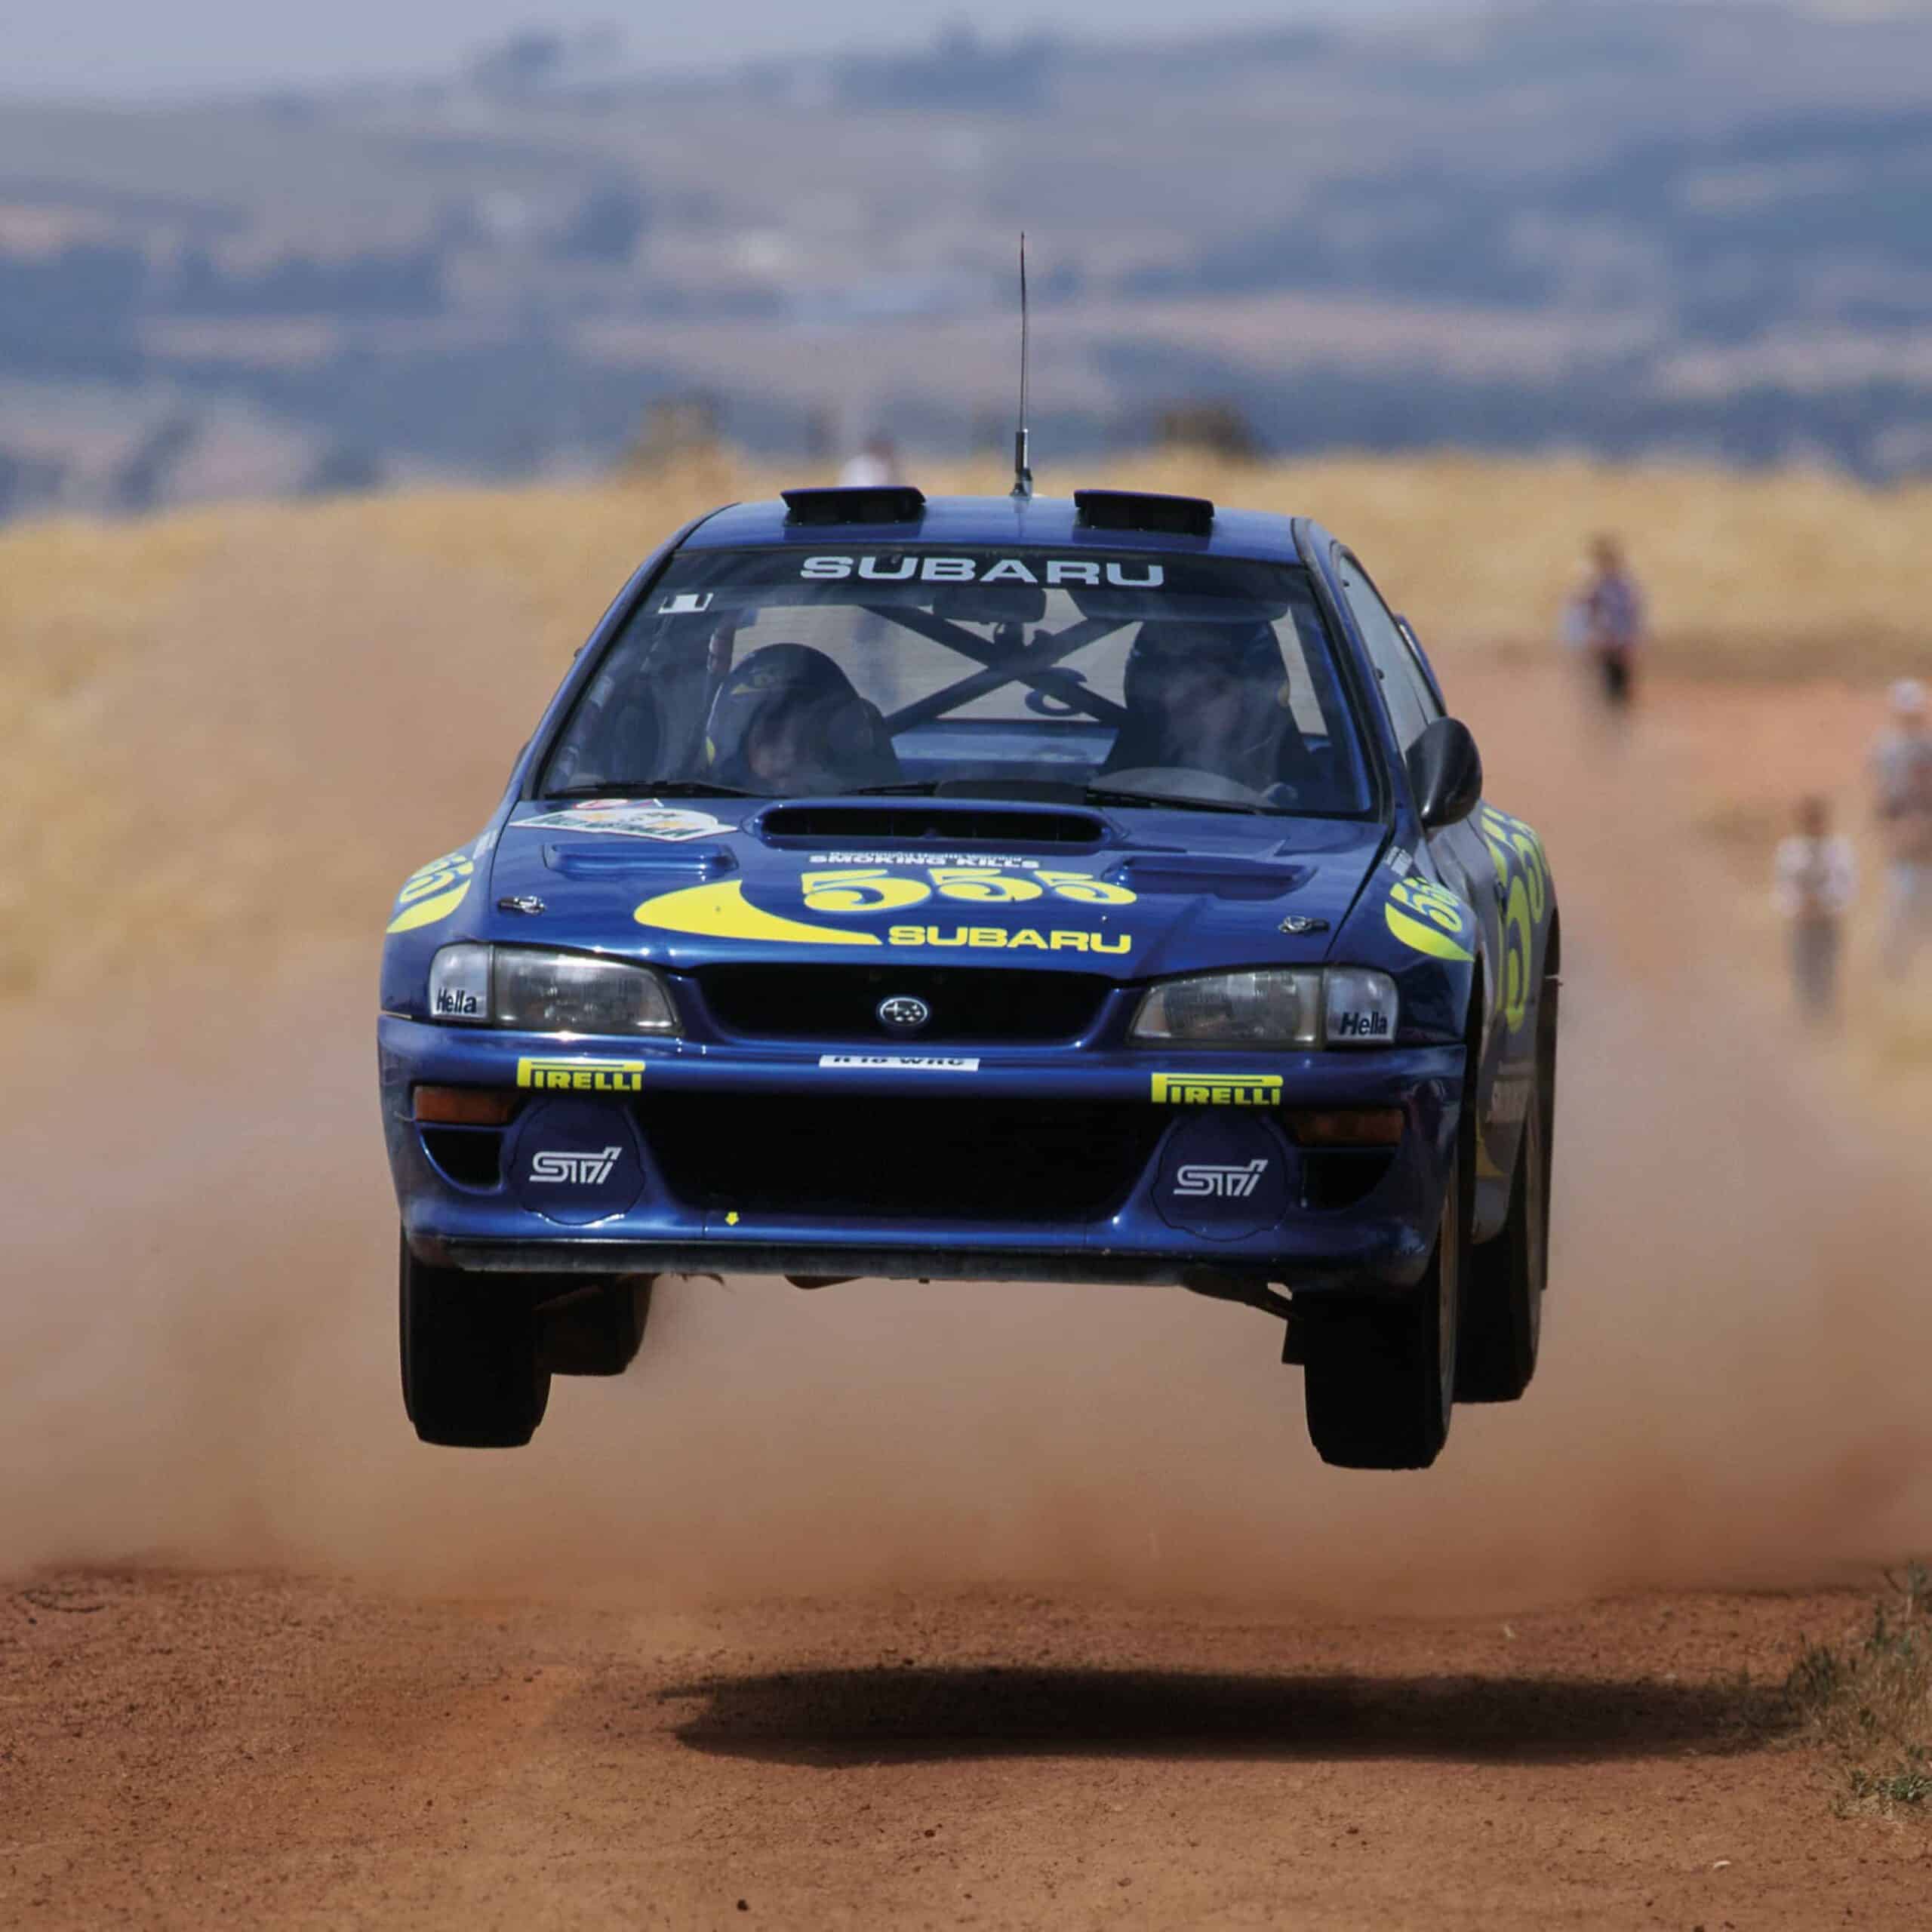 Subaru Impreza in the air